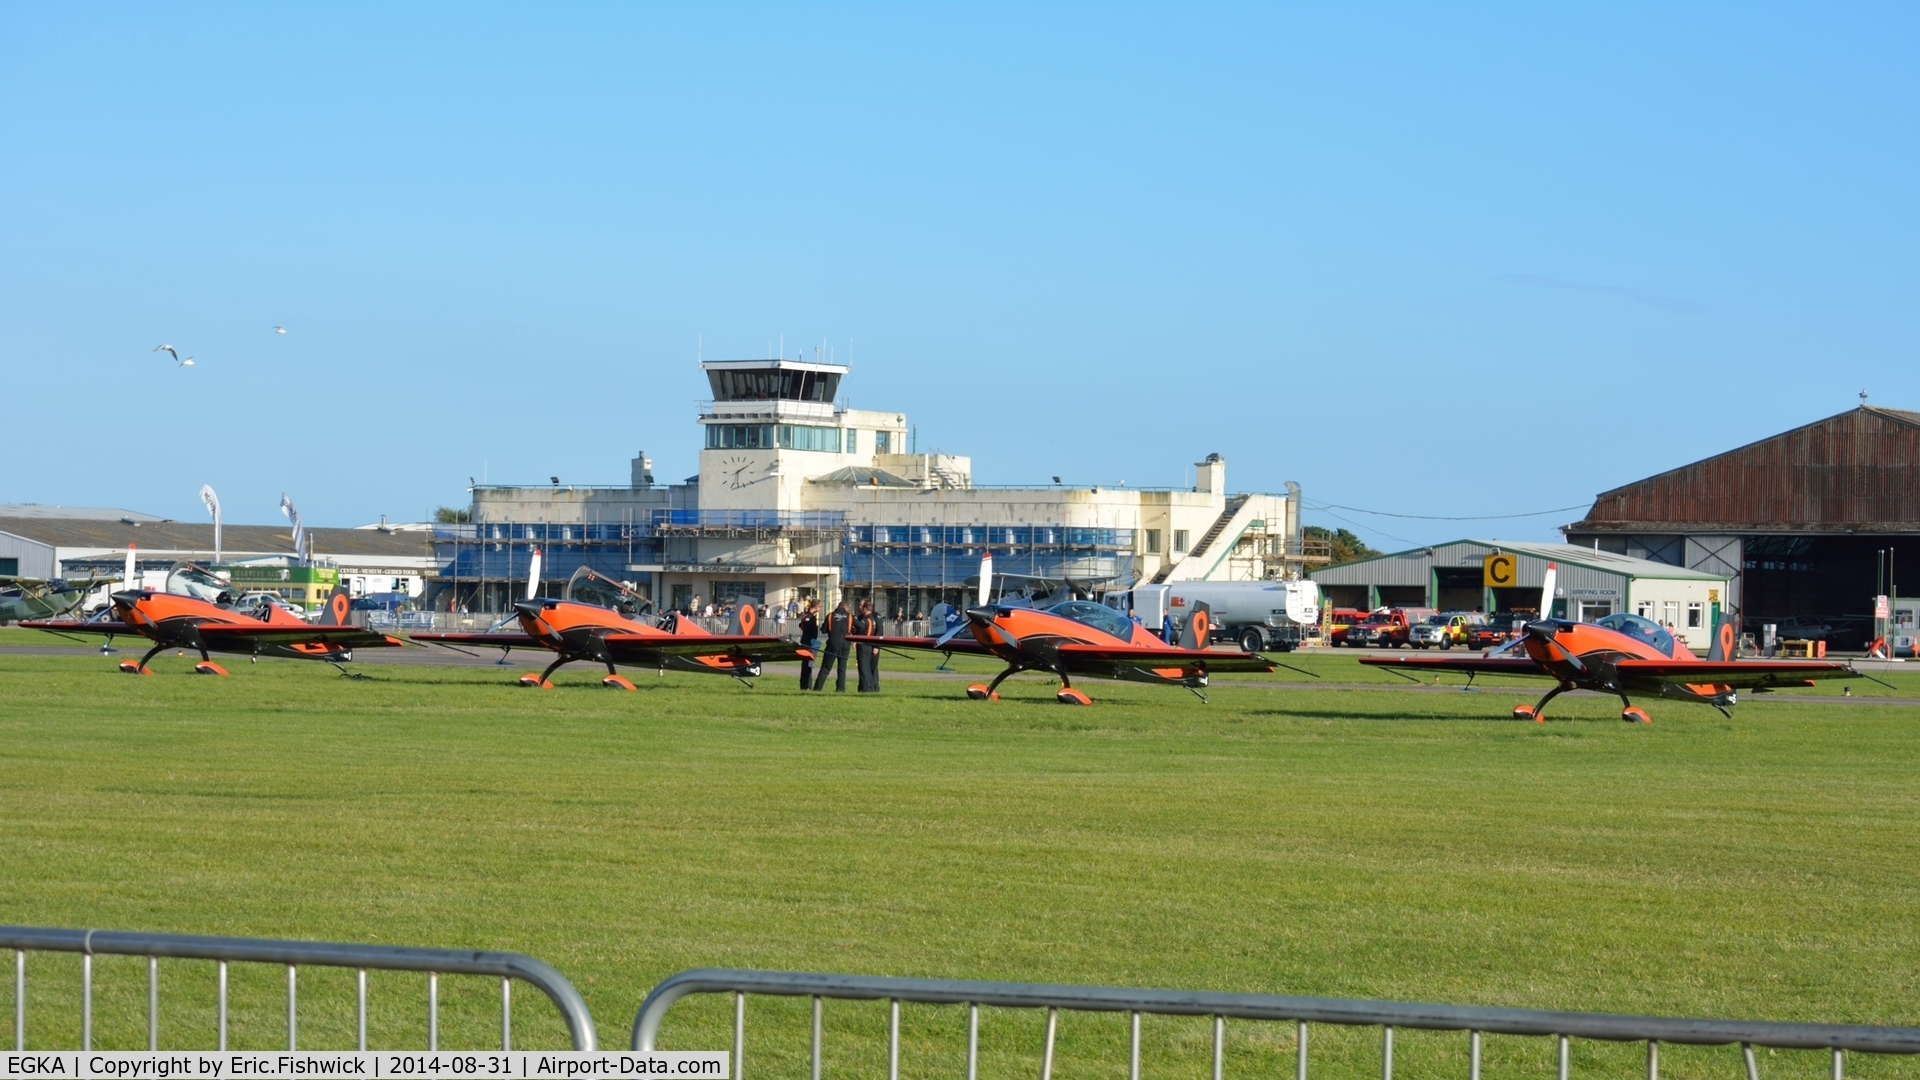 Shoreham Airport, Shoreham United Kingdom (EGKA) - The Blades Aerobatic Team relaxing in the evening sunshine after an exhilarating display at the superb 25th Anniversary RAFA Shoreham Airshow.